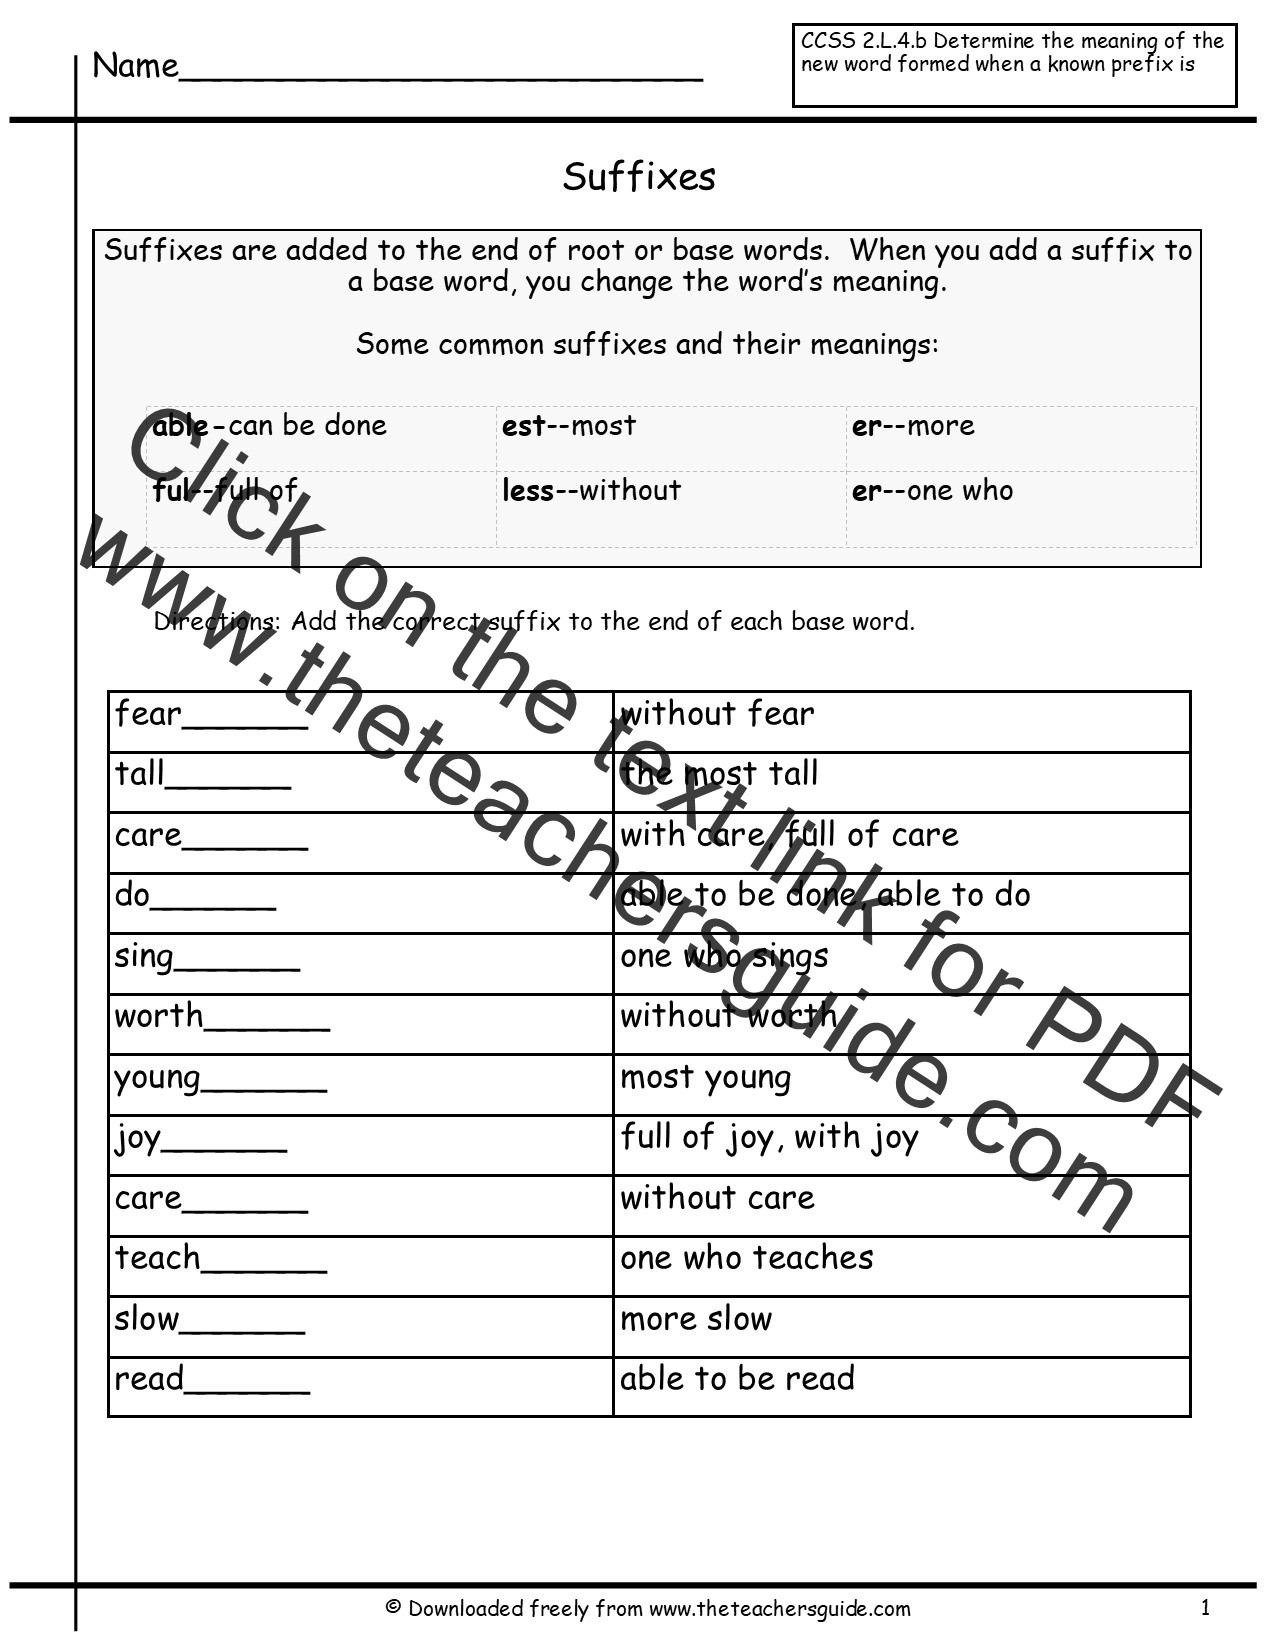 Prefixes and Suffixes Worksheet Free Prefixes and Suffixes Worksheets From the Teacher S Guide